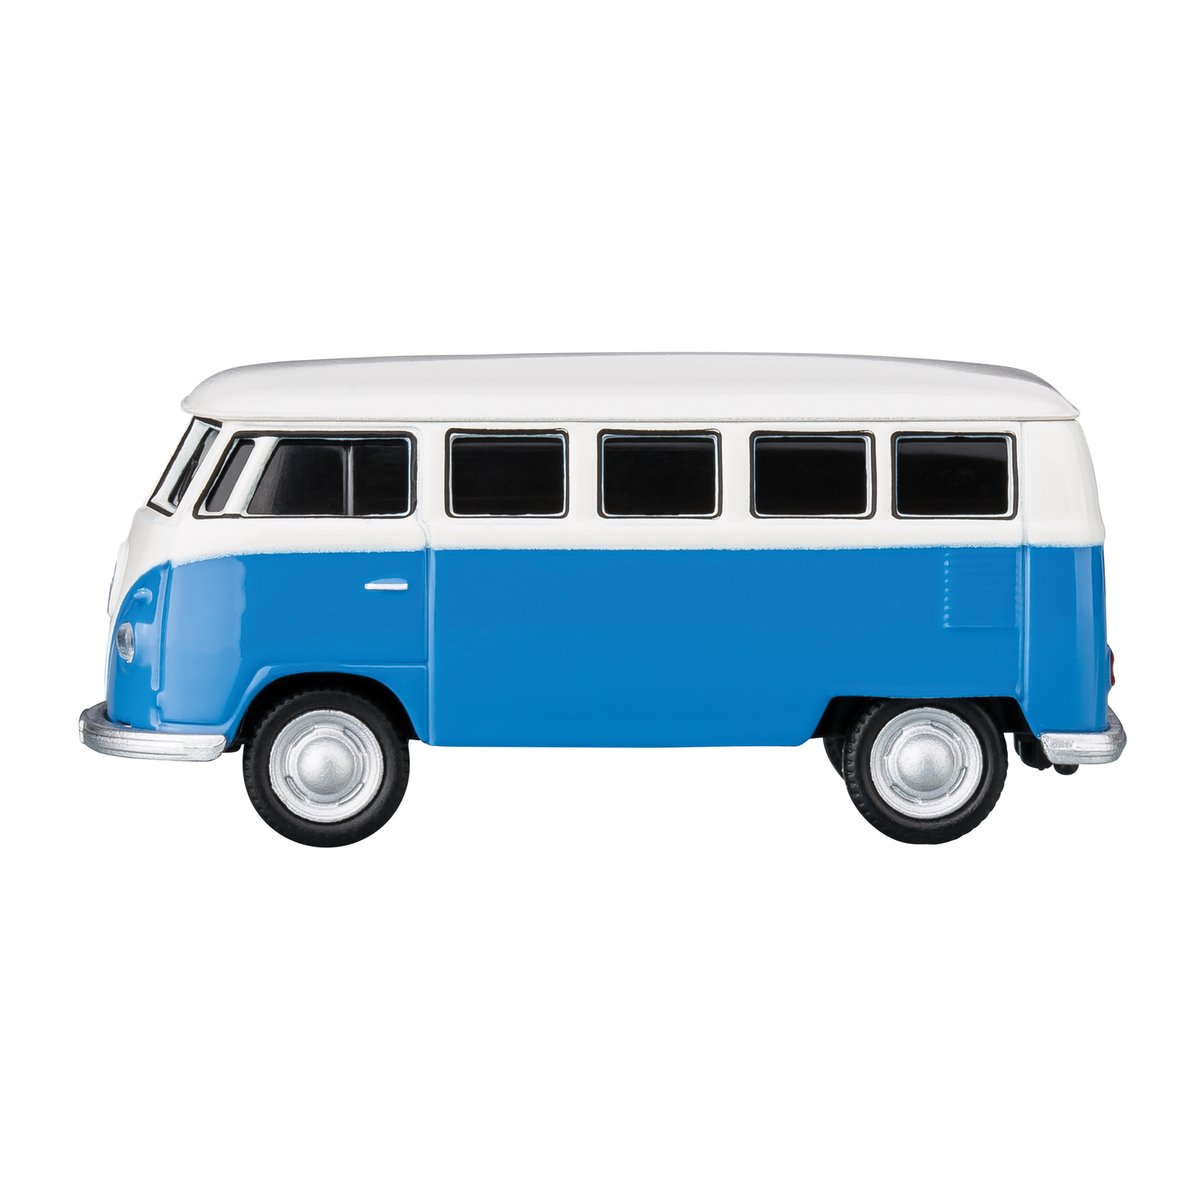 USB flash drive REEVES-VW Bus T1 1:72 blue 16GB